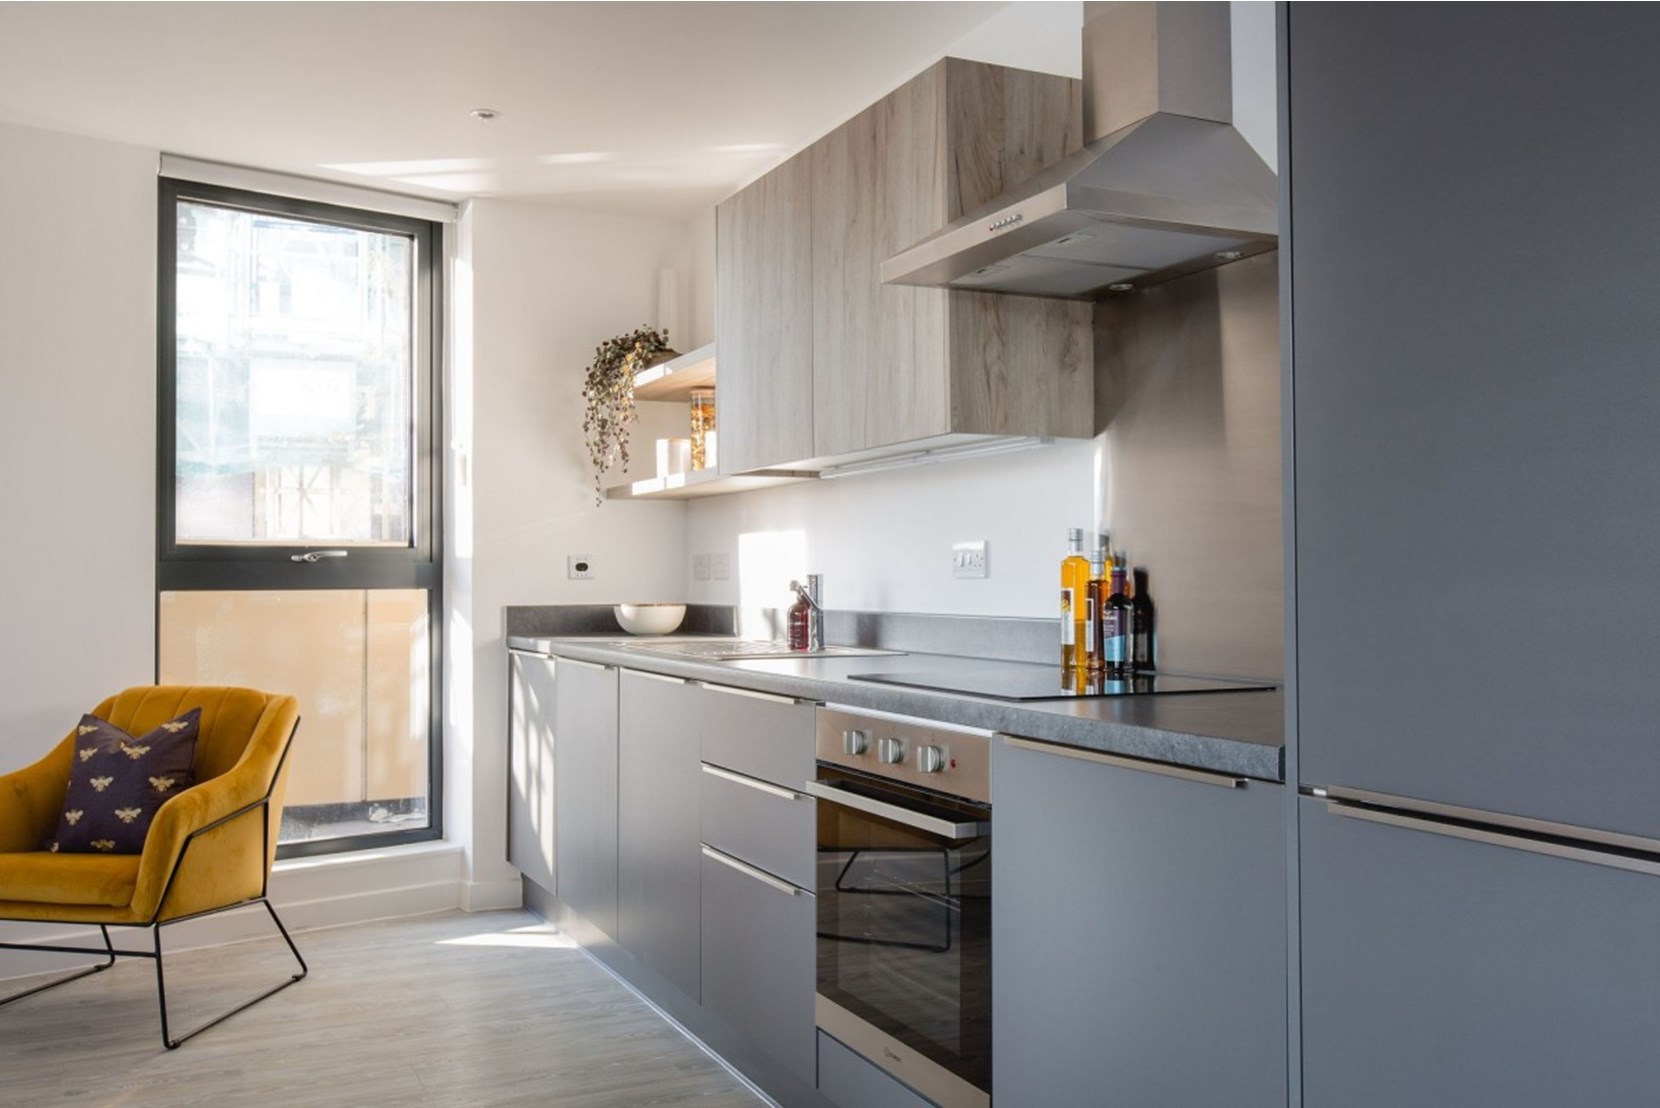 Apartment-Allsop-Vox-Manchester-interior-kitchen